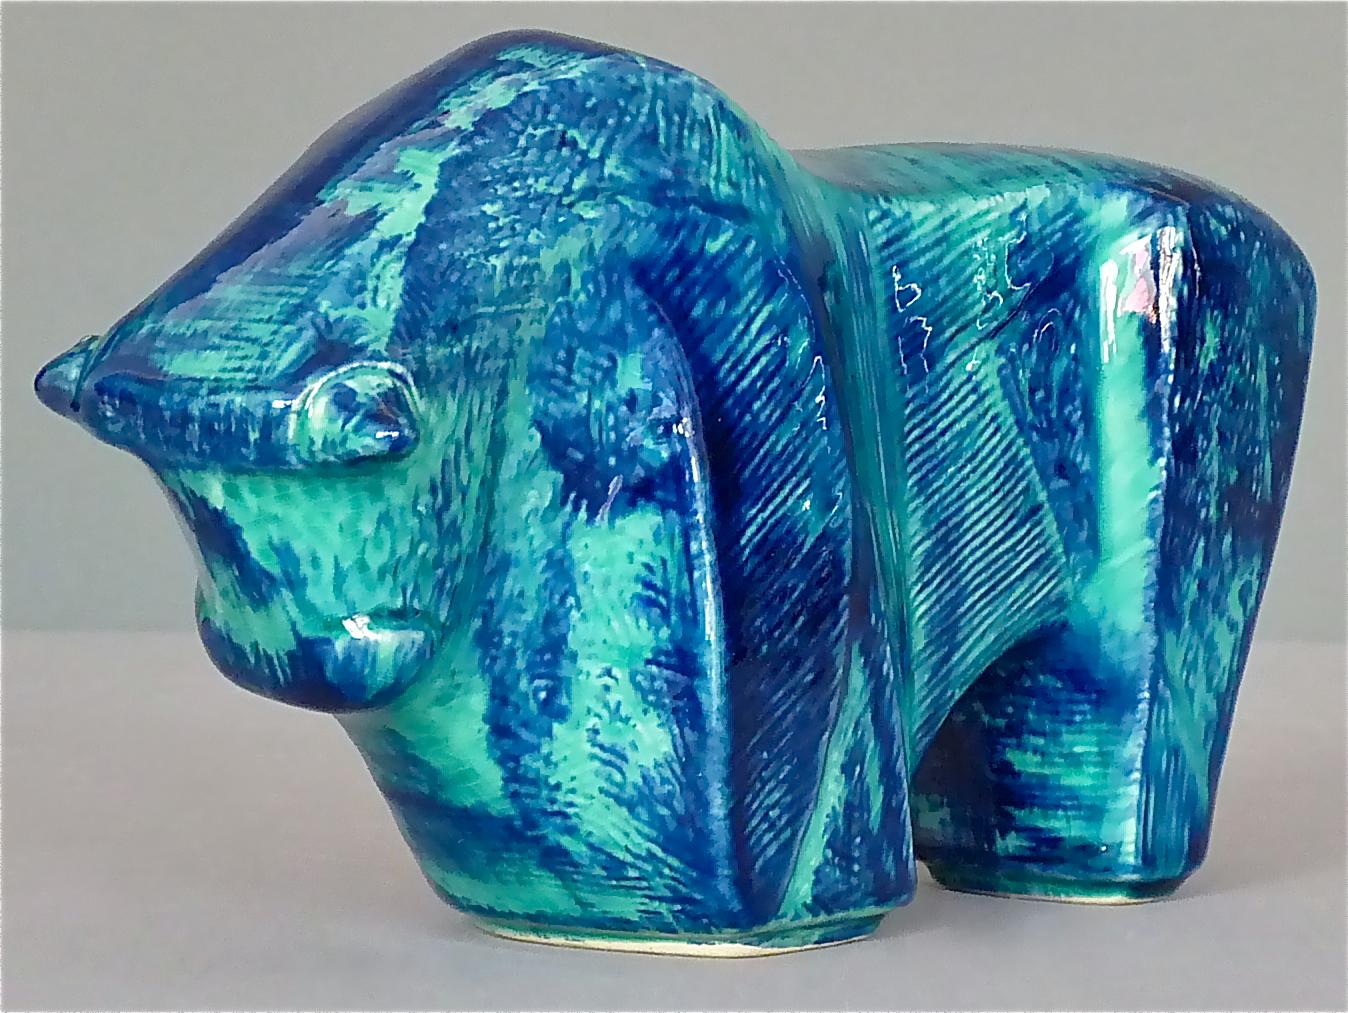 Cubist Bison Bull Sculpture Art Deco Style Blue Ceramic Italy 1970s Bitossi Era For Sale 6